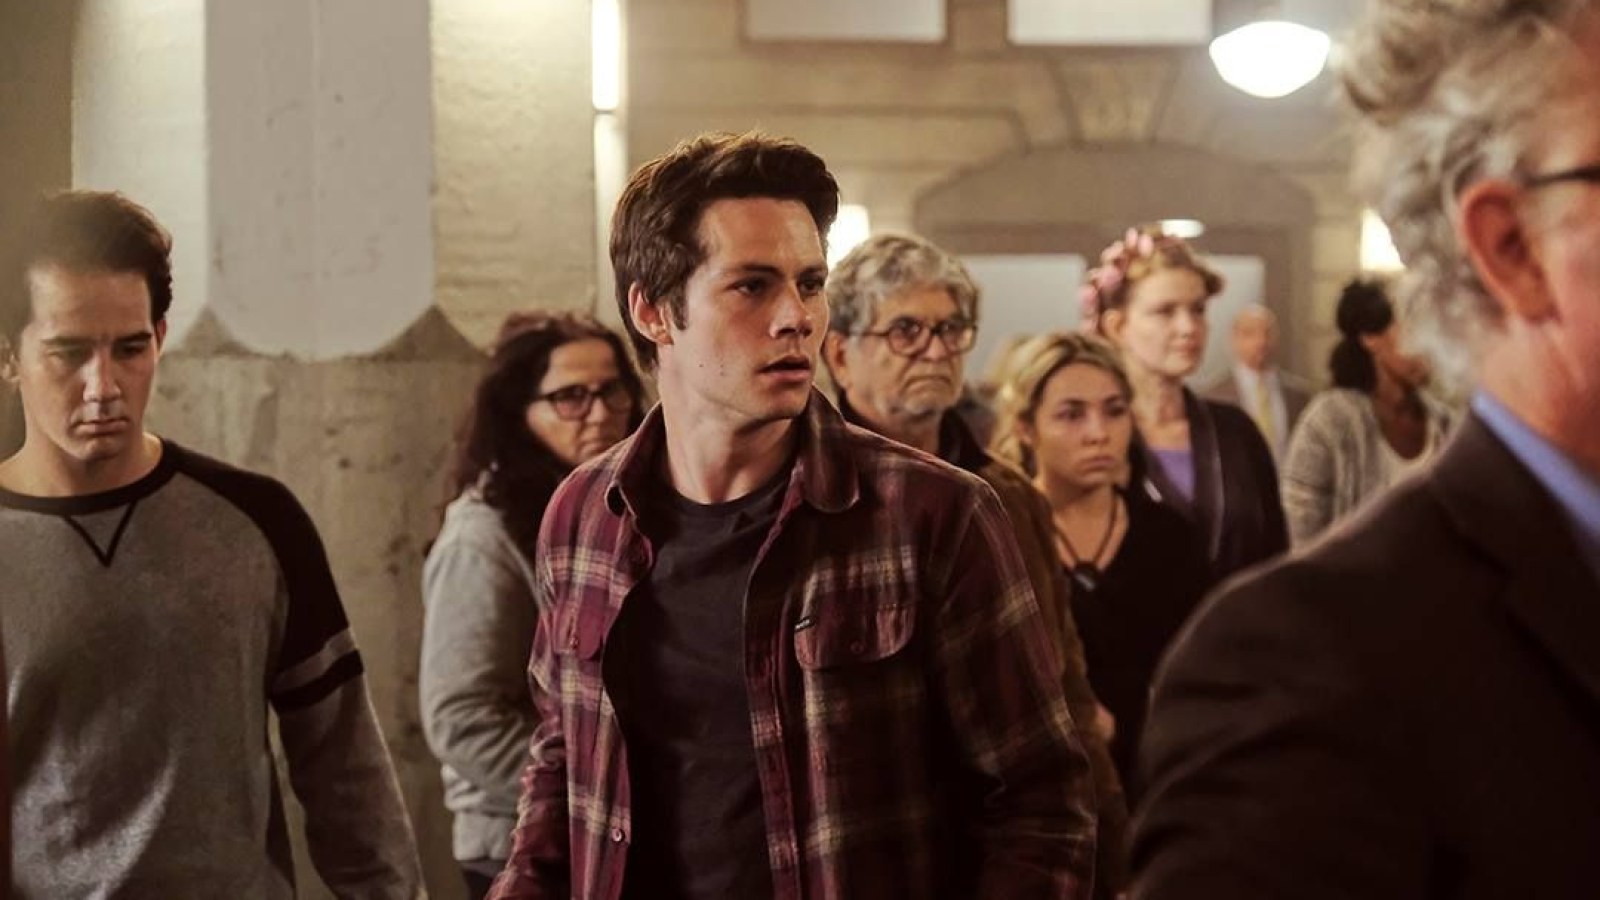 Teen Wolf' season finale recap: A breakup and a shakeup